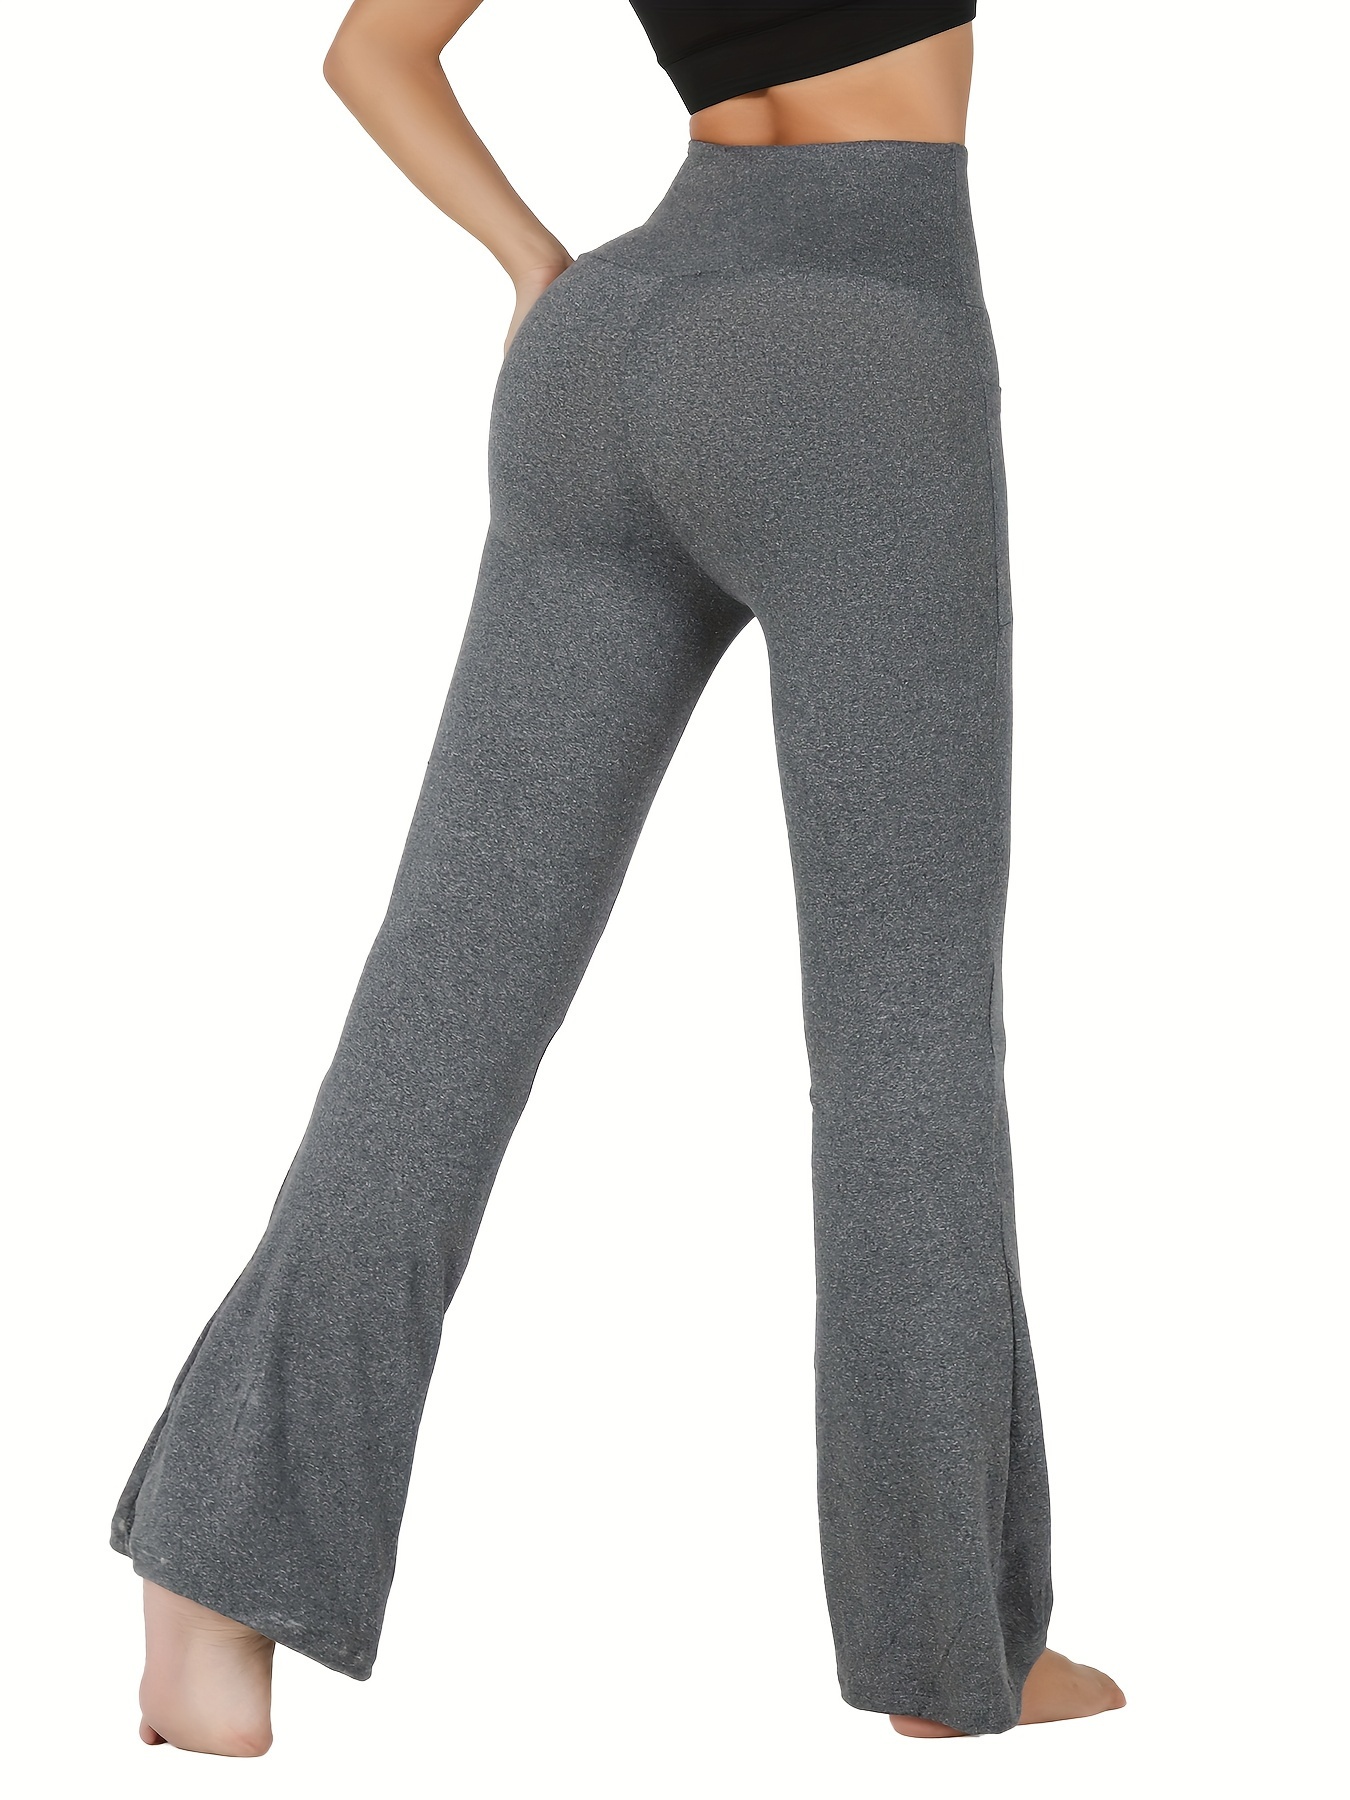 G-Style USA Women's Bootcut Flare Leggings Yoga Pants 8150 - Charcoal Gray  - Medium 